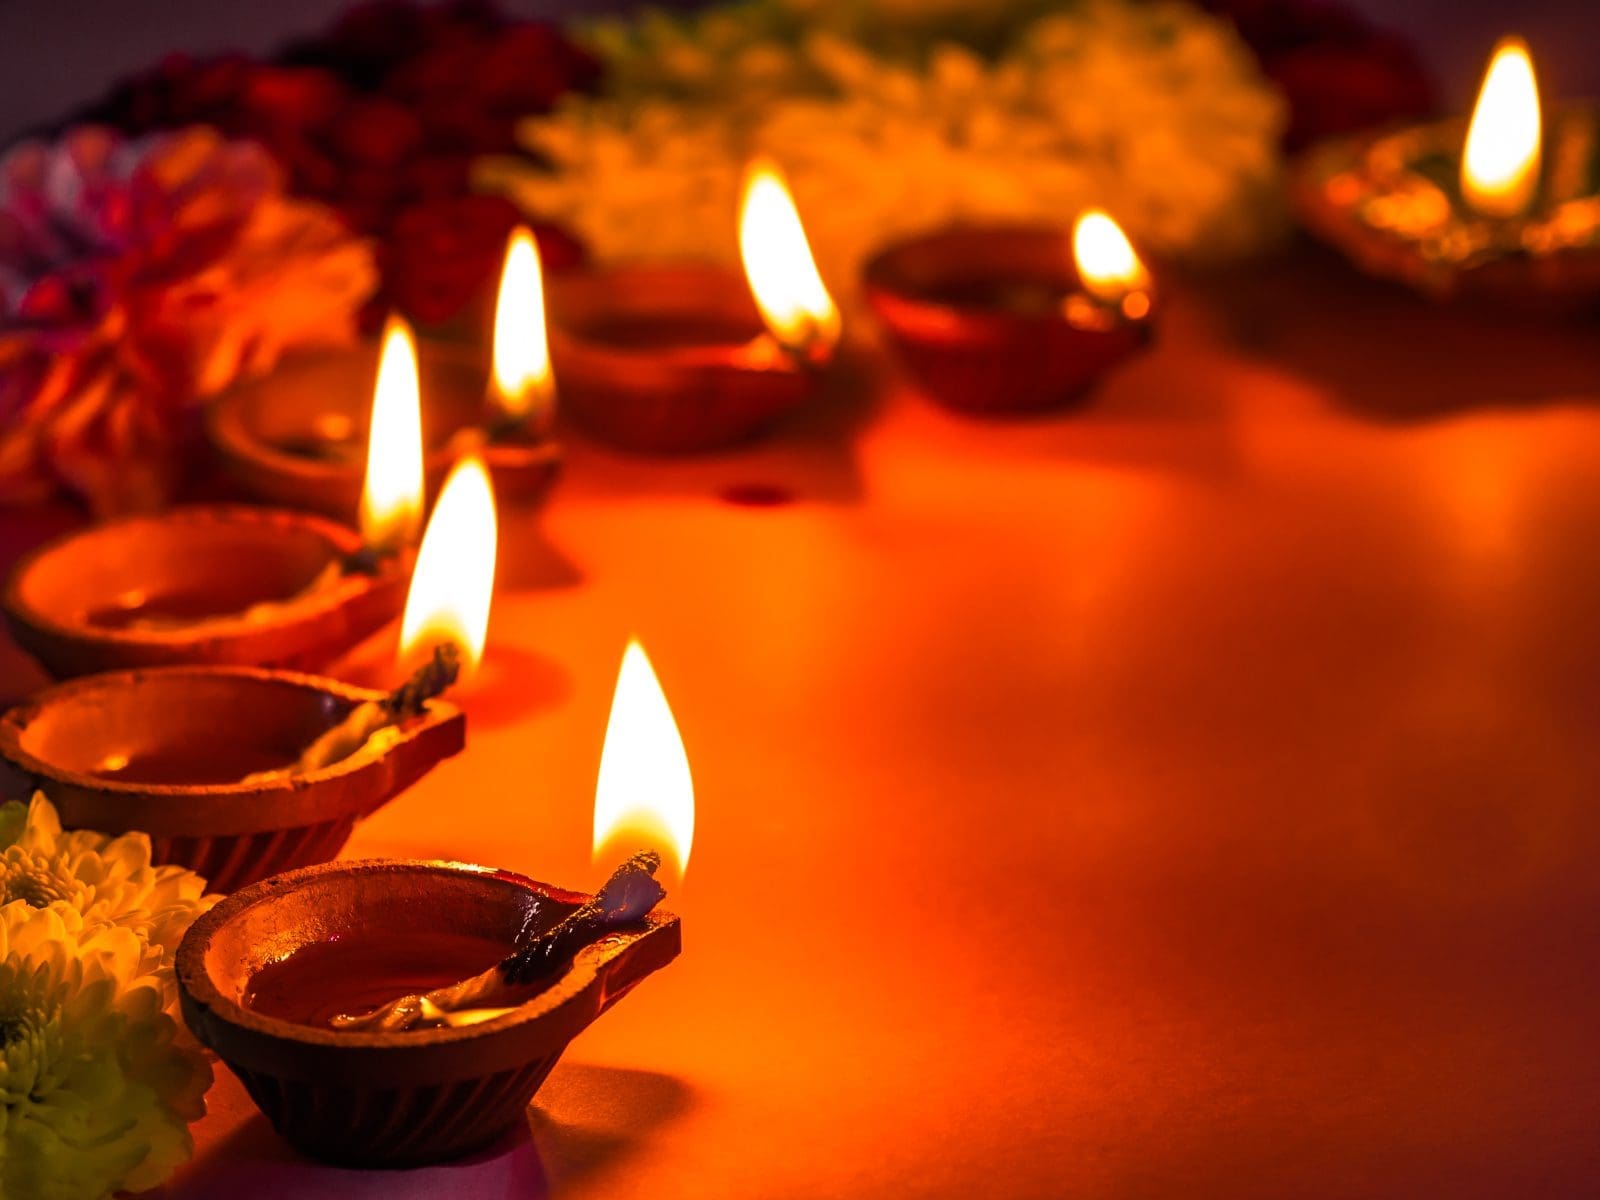 diwali festival images hd